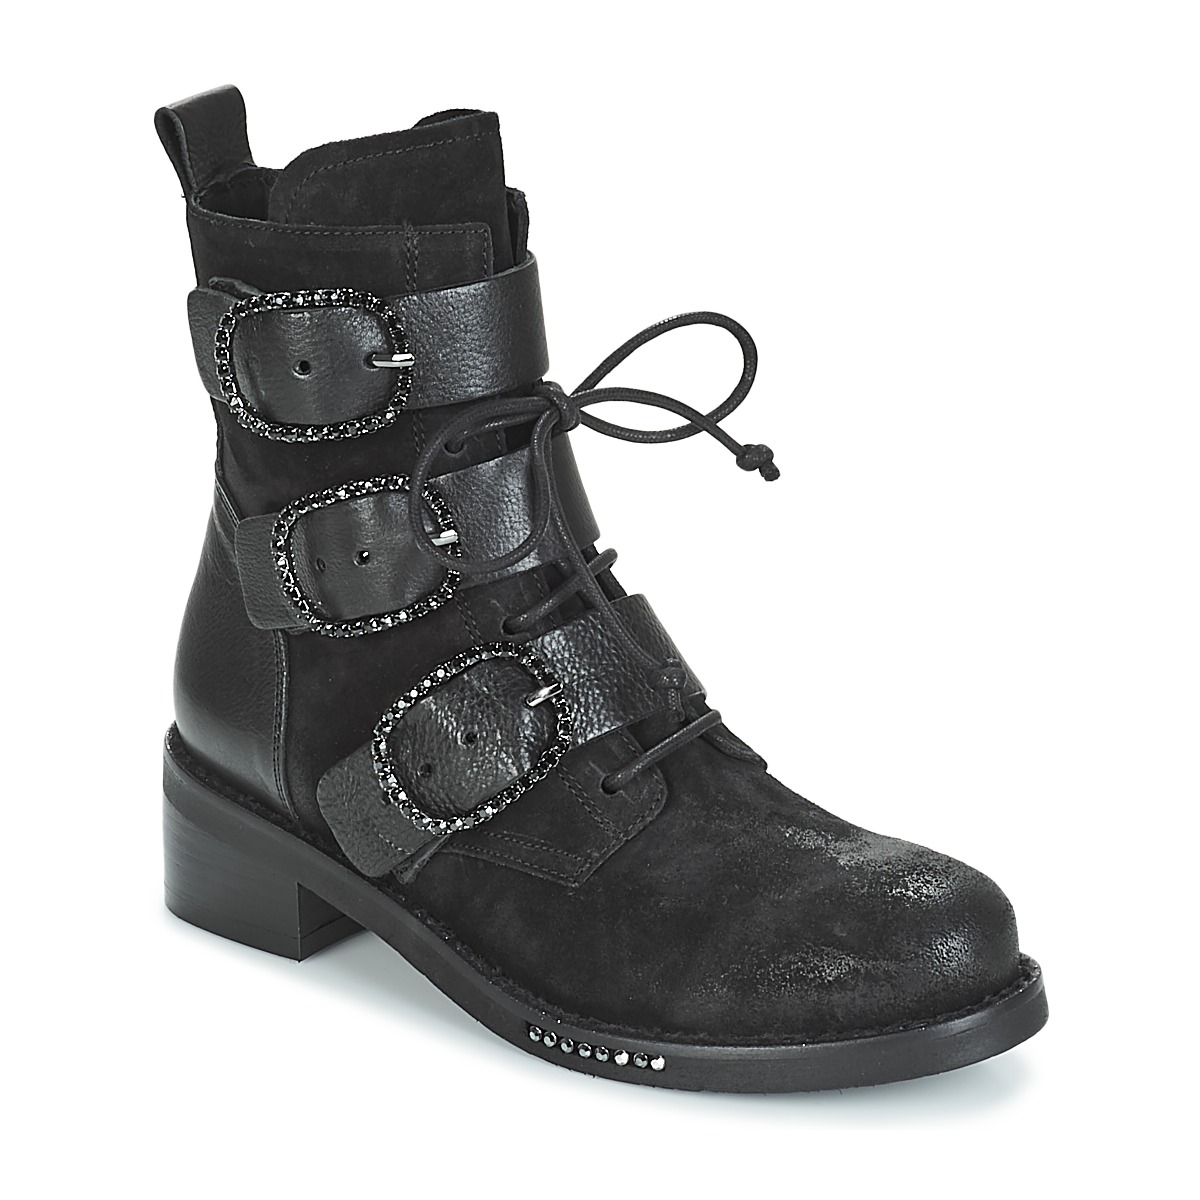 Shoes Women Mid boots Mimmu MOEZ Black